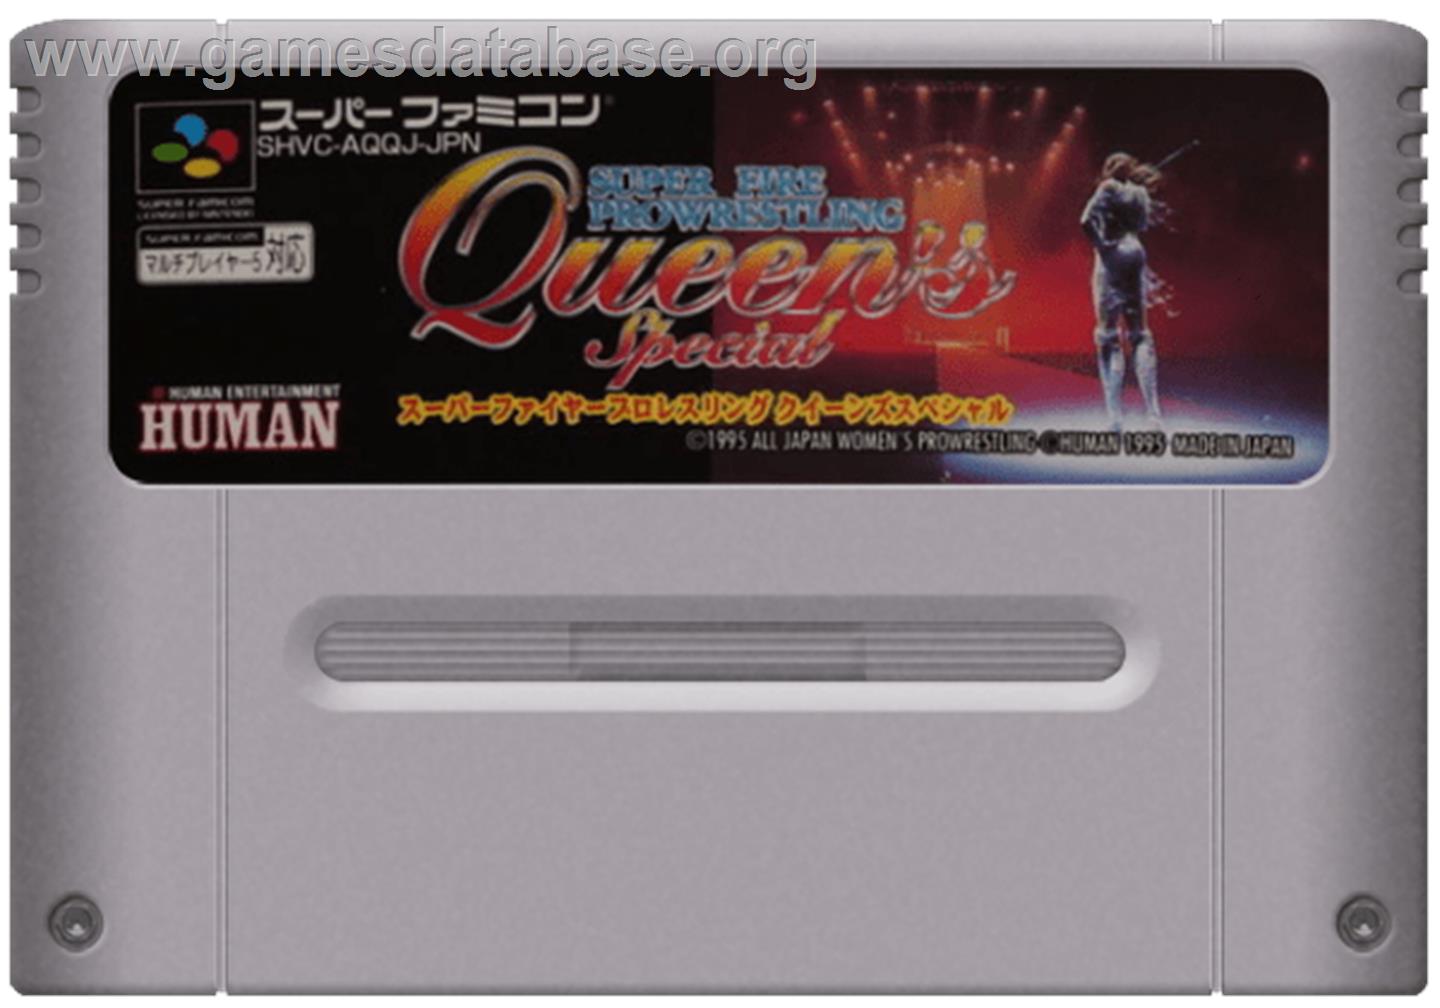 Super Fire Pro Wrestling Queen's Special - Nintendo SNES - Artwork - Cartridge